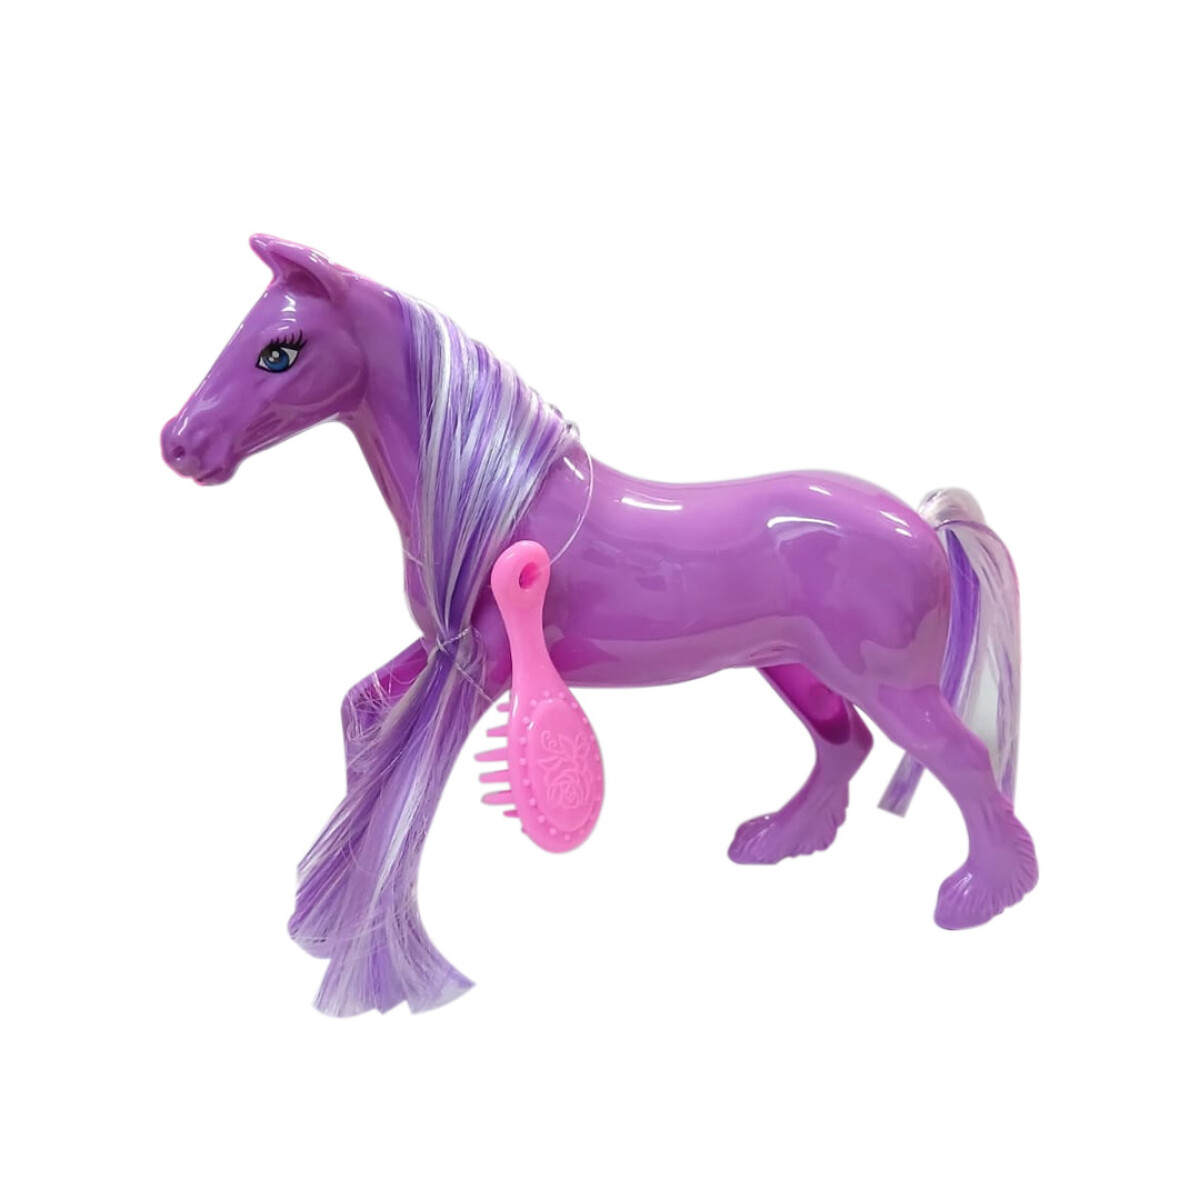 Juguete figura pony - violeta 